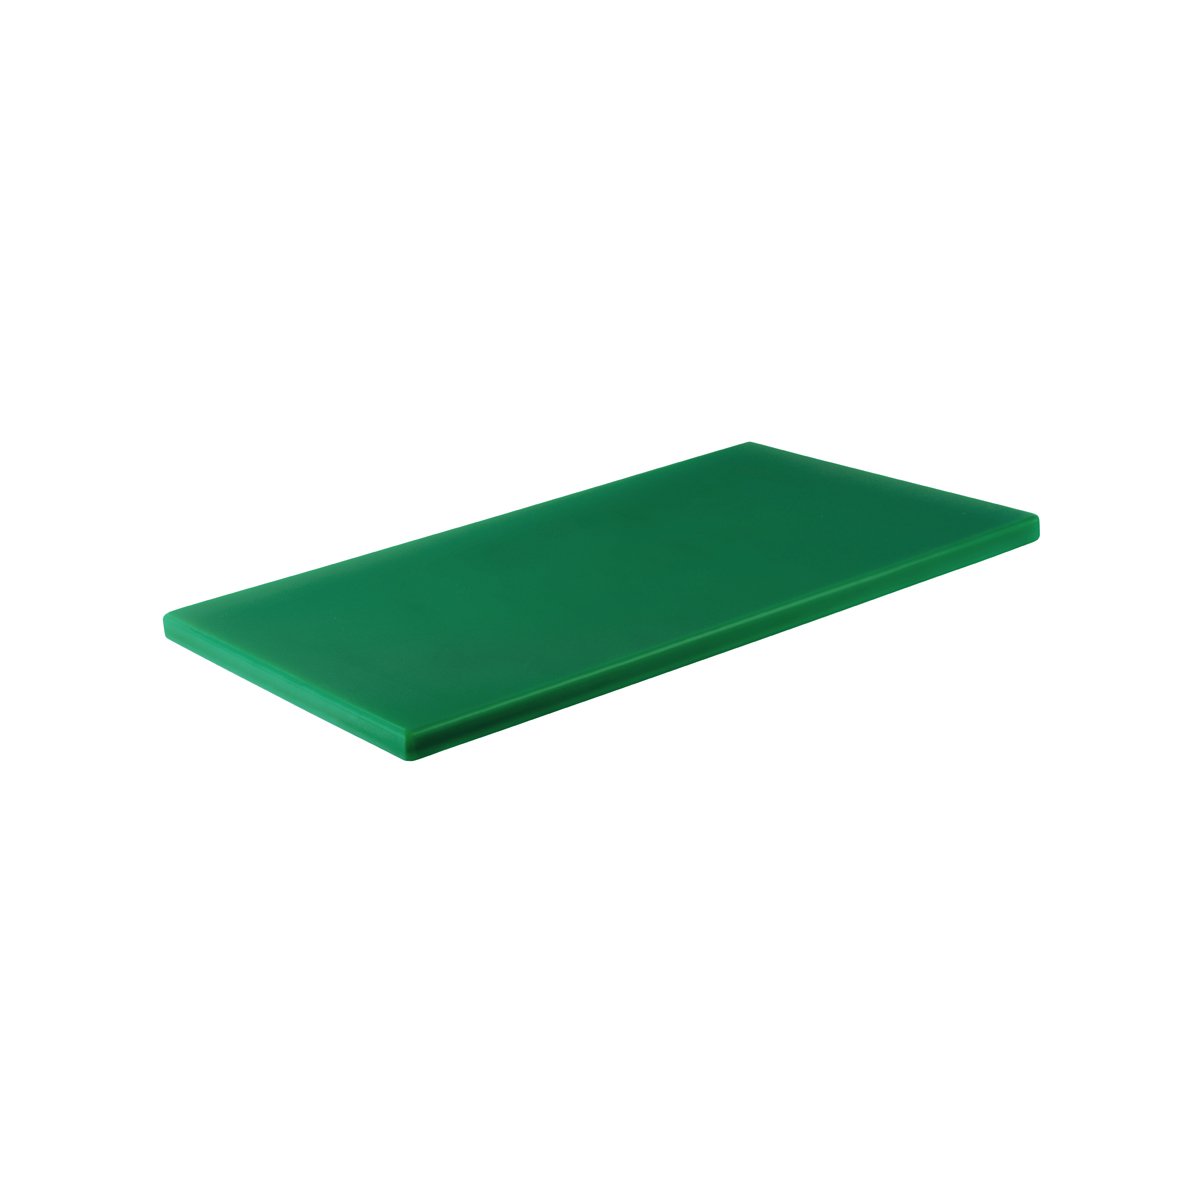 04352 Chef Inox Cutting Board Polyethylene Green 380x510x12mm Tomkin Australia Hospitality Supplies